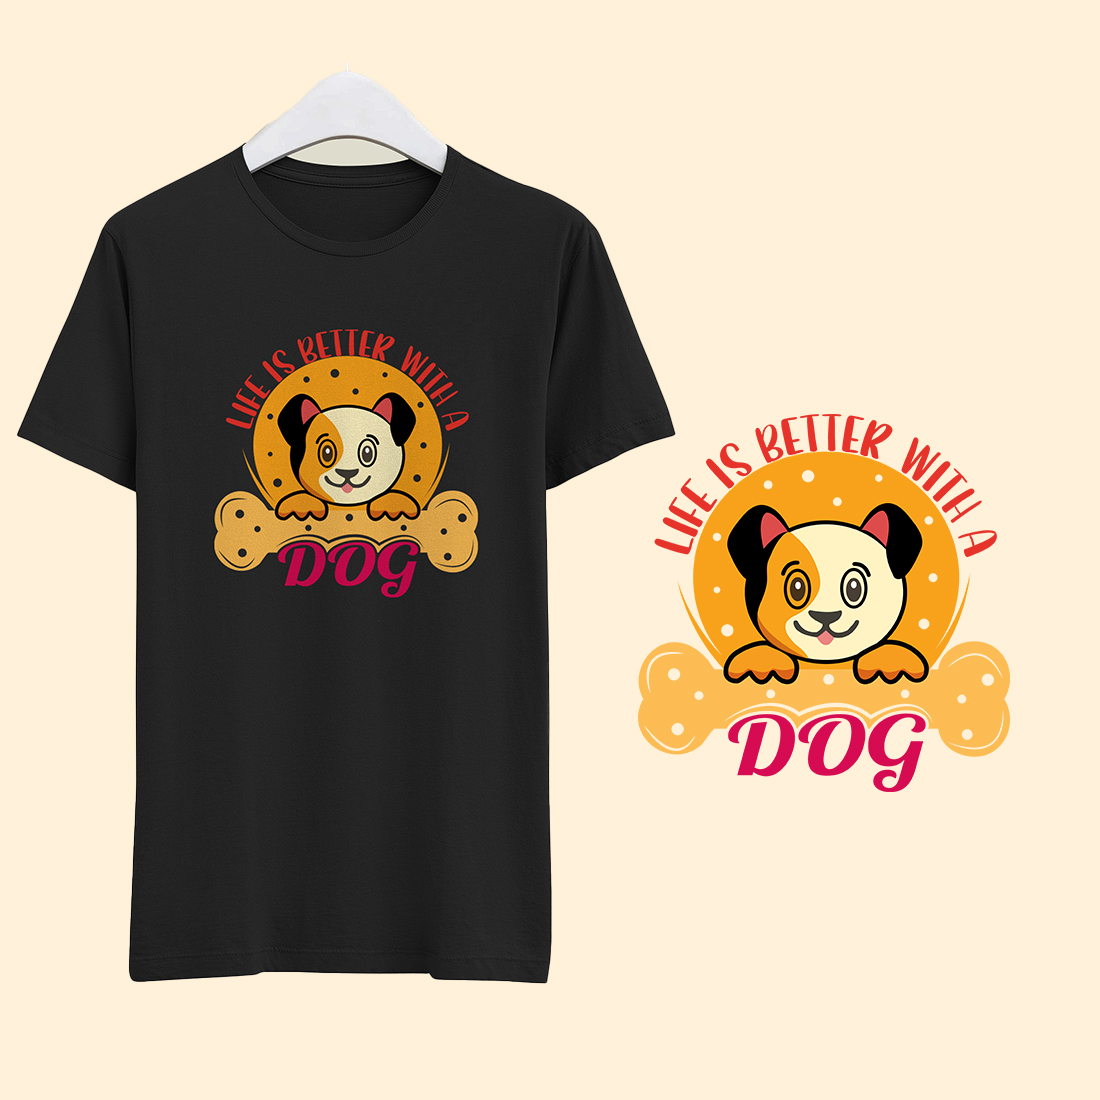 Mockup example preview 3 Dog T-shirt Design Bundle.